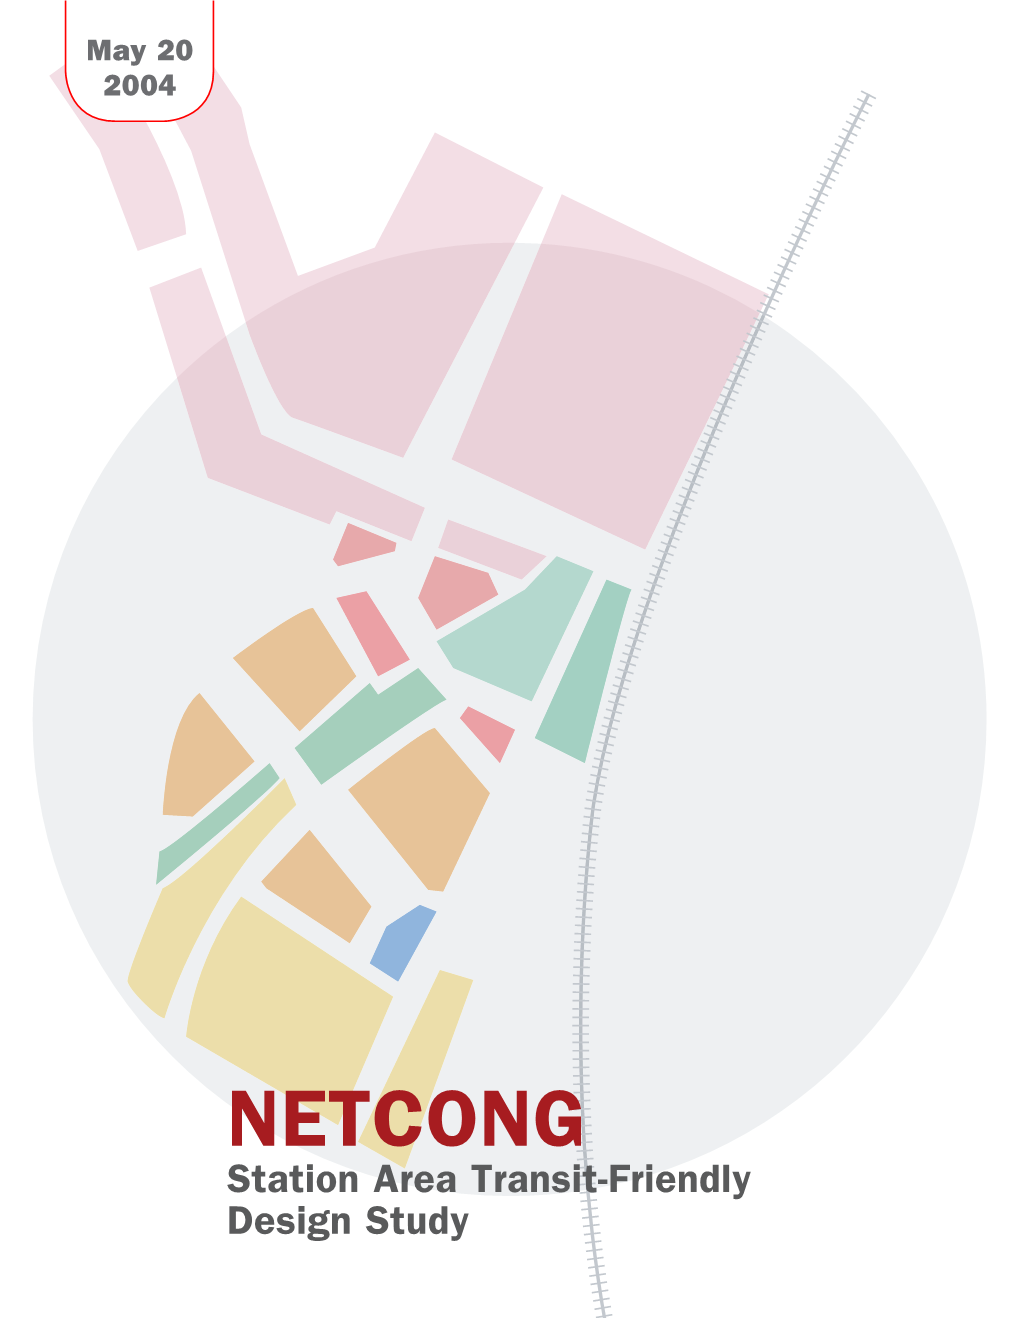 RPA Study, Netcong Station Area Transit-Friendly